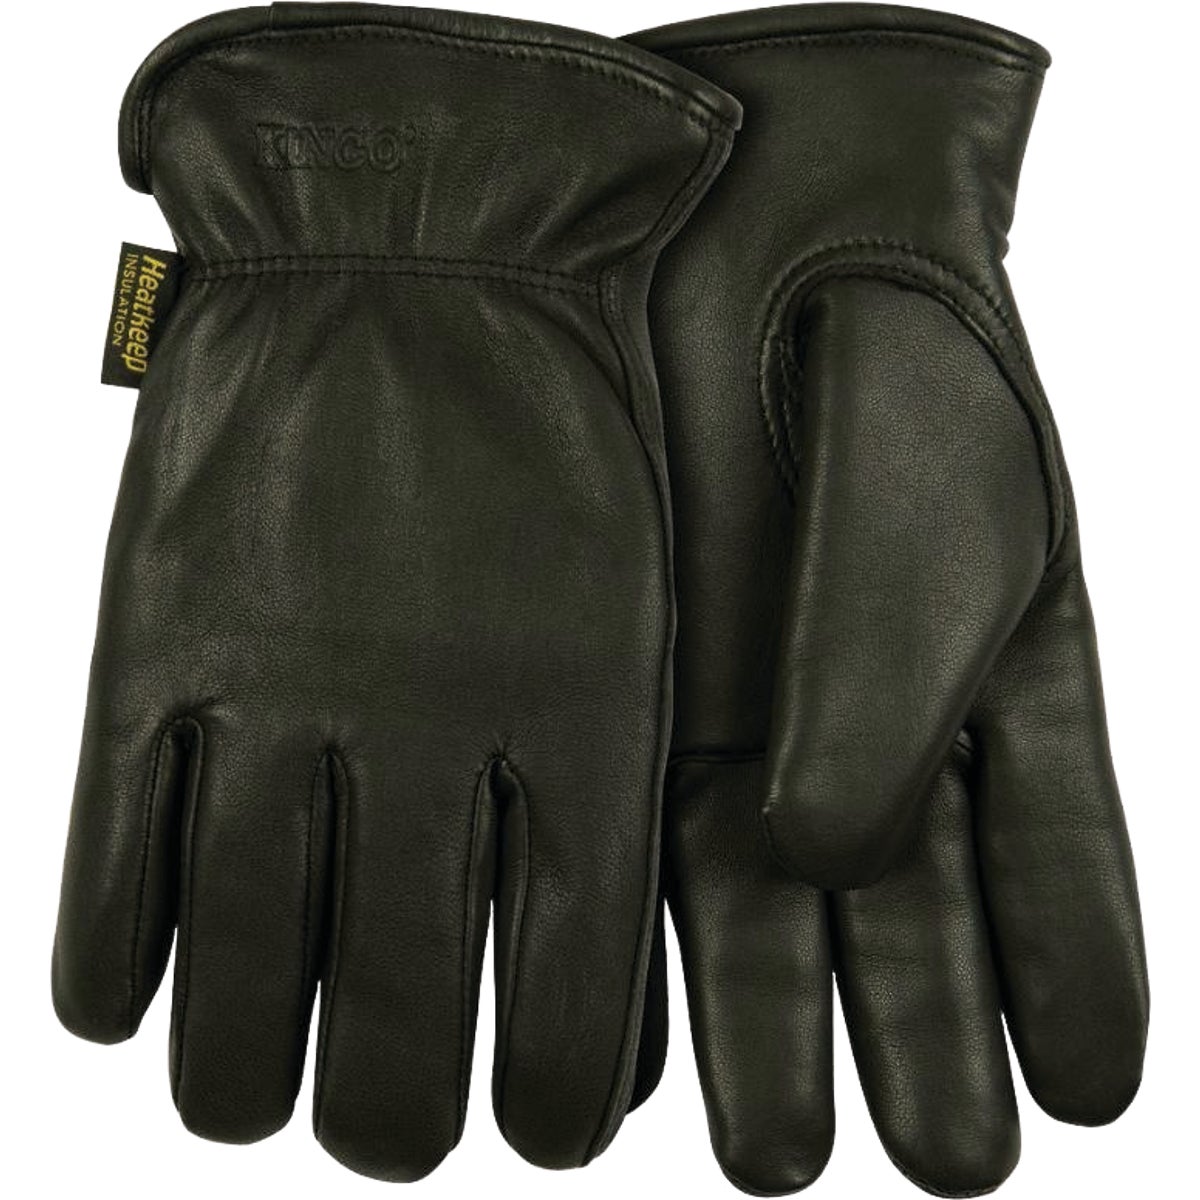 Kinco Men's XL Full Grain Goatskin Winter Work Glove